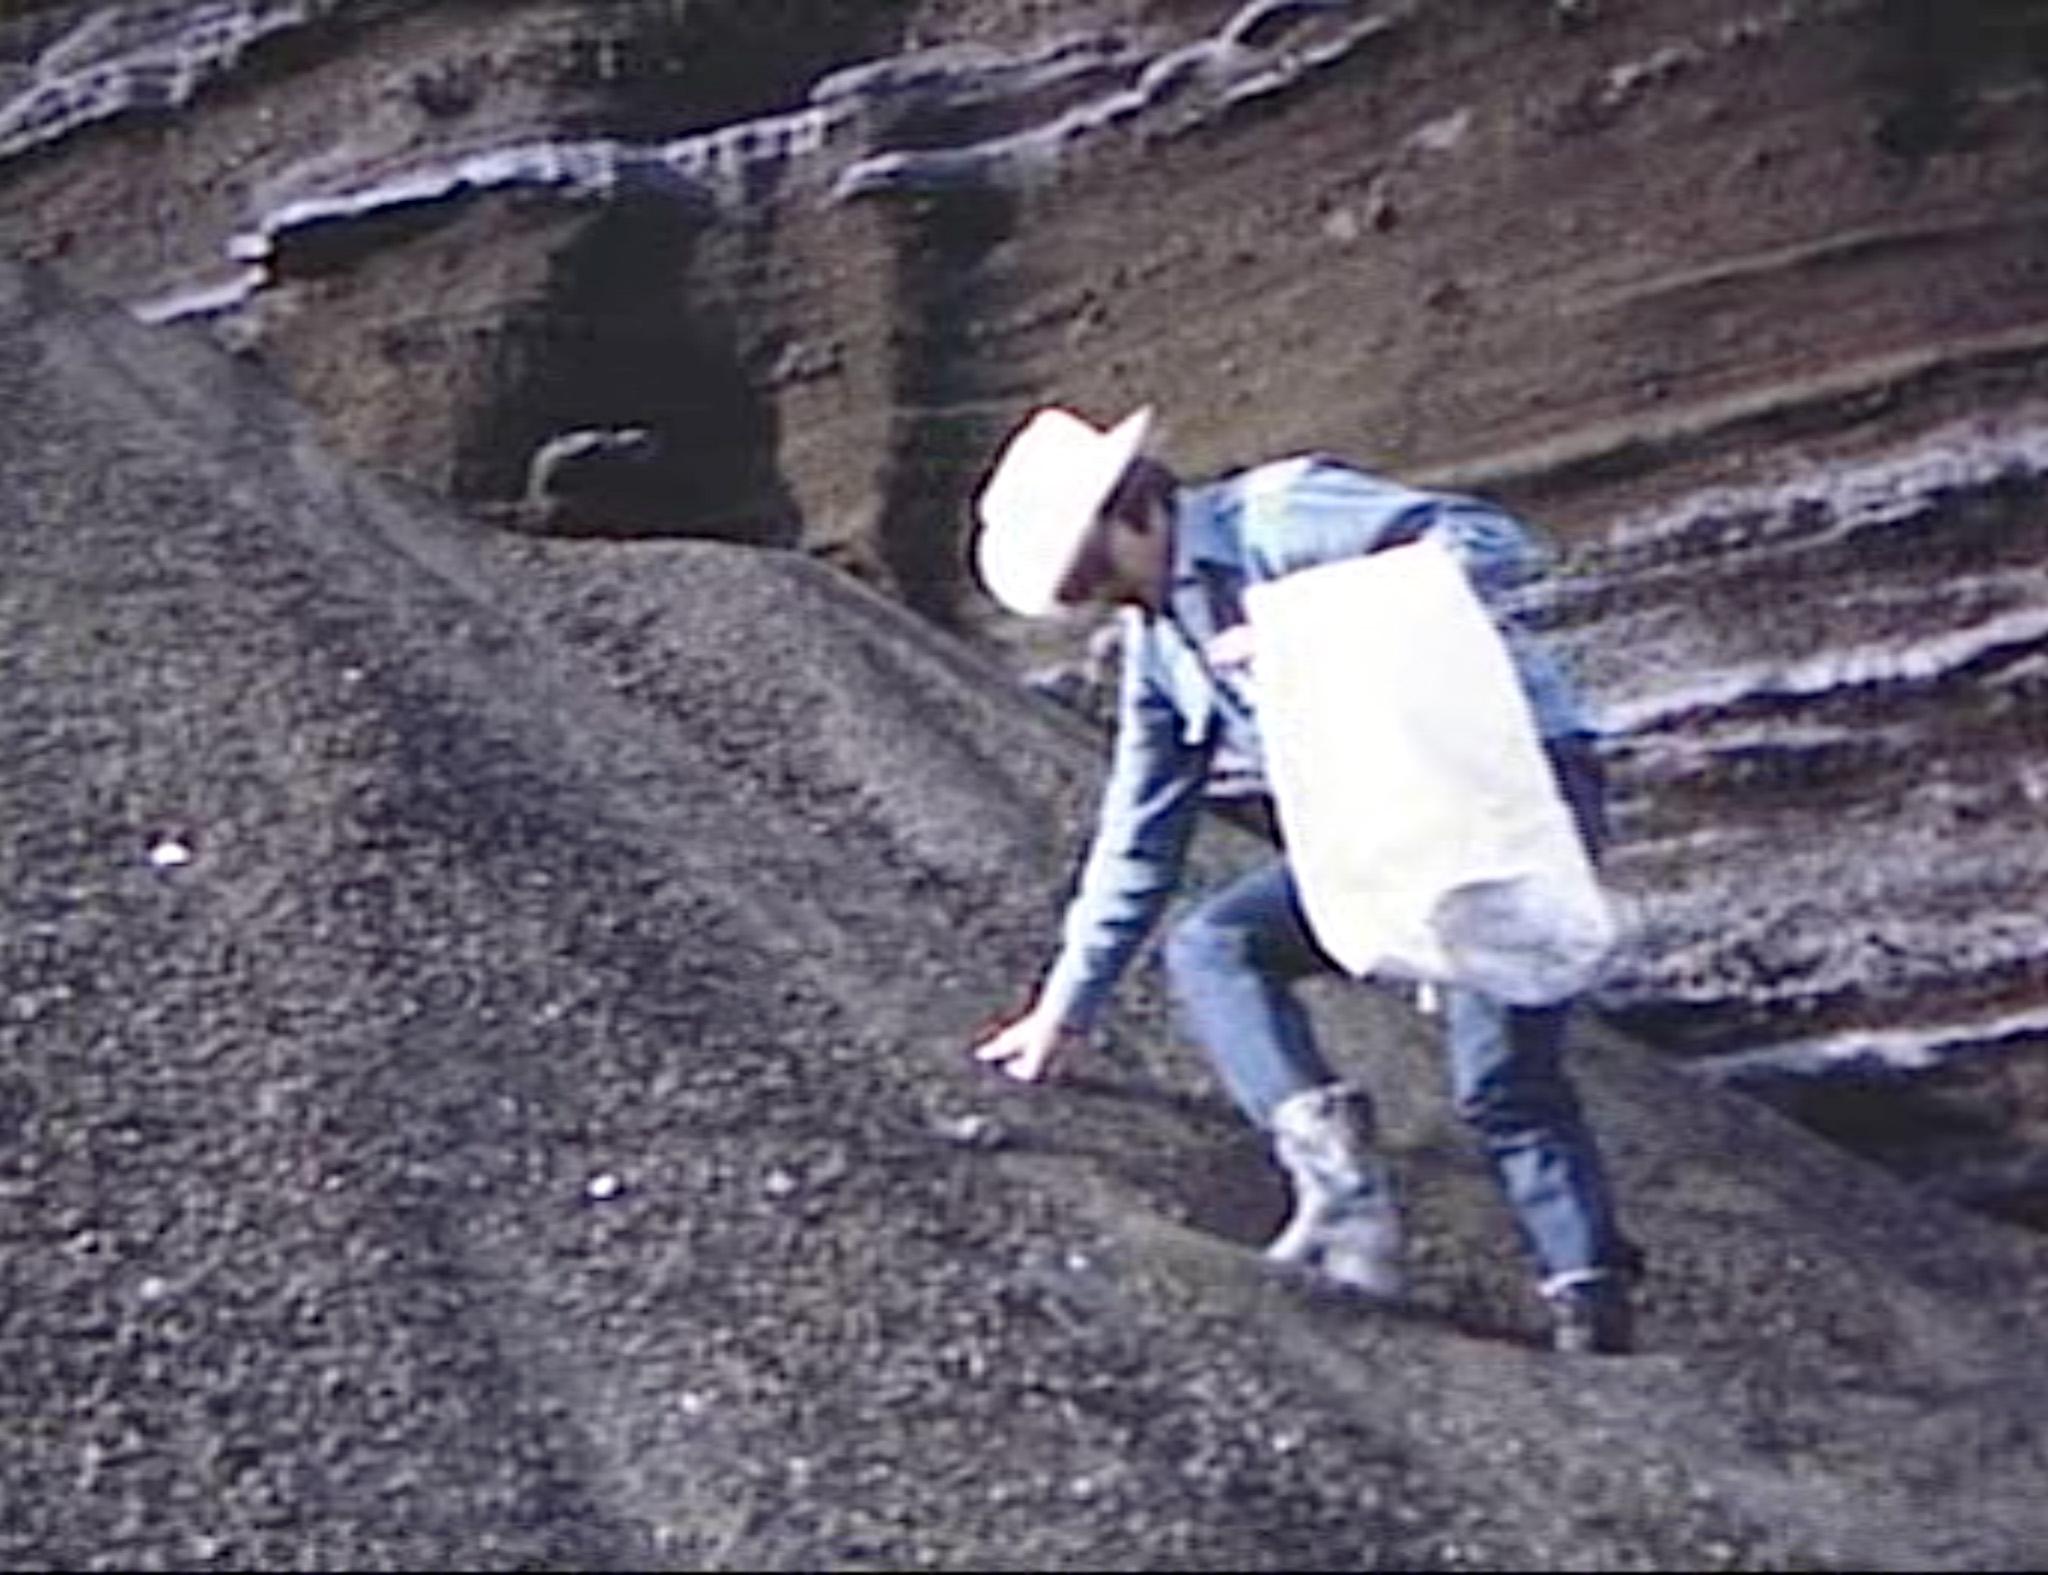 A man wearing a cowboy hat descending a steep slope of gravel